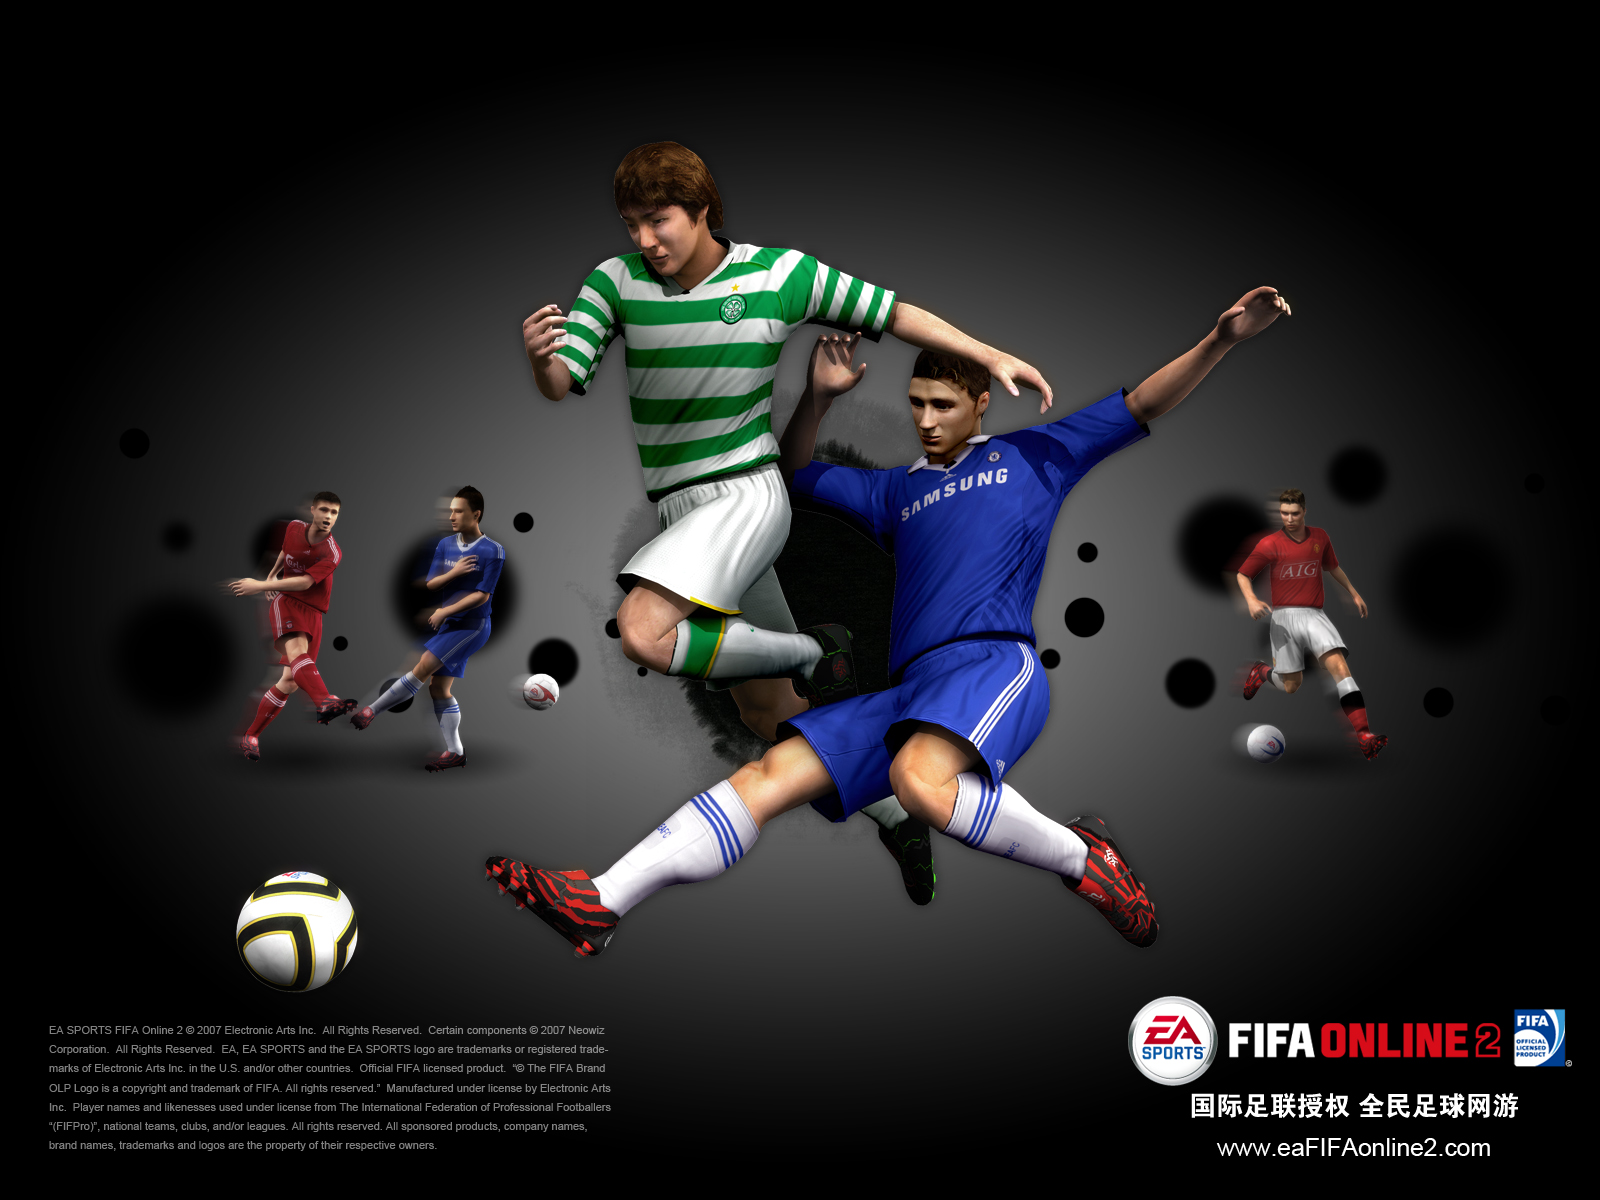 EA SPORTS FIFA Online 2 网络足球游戏